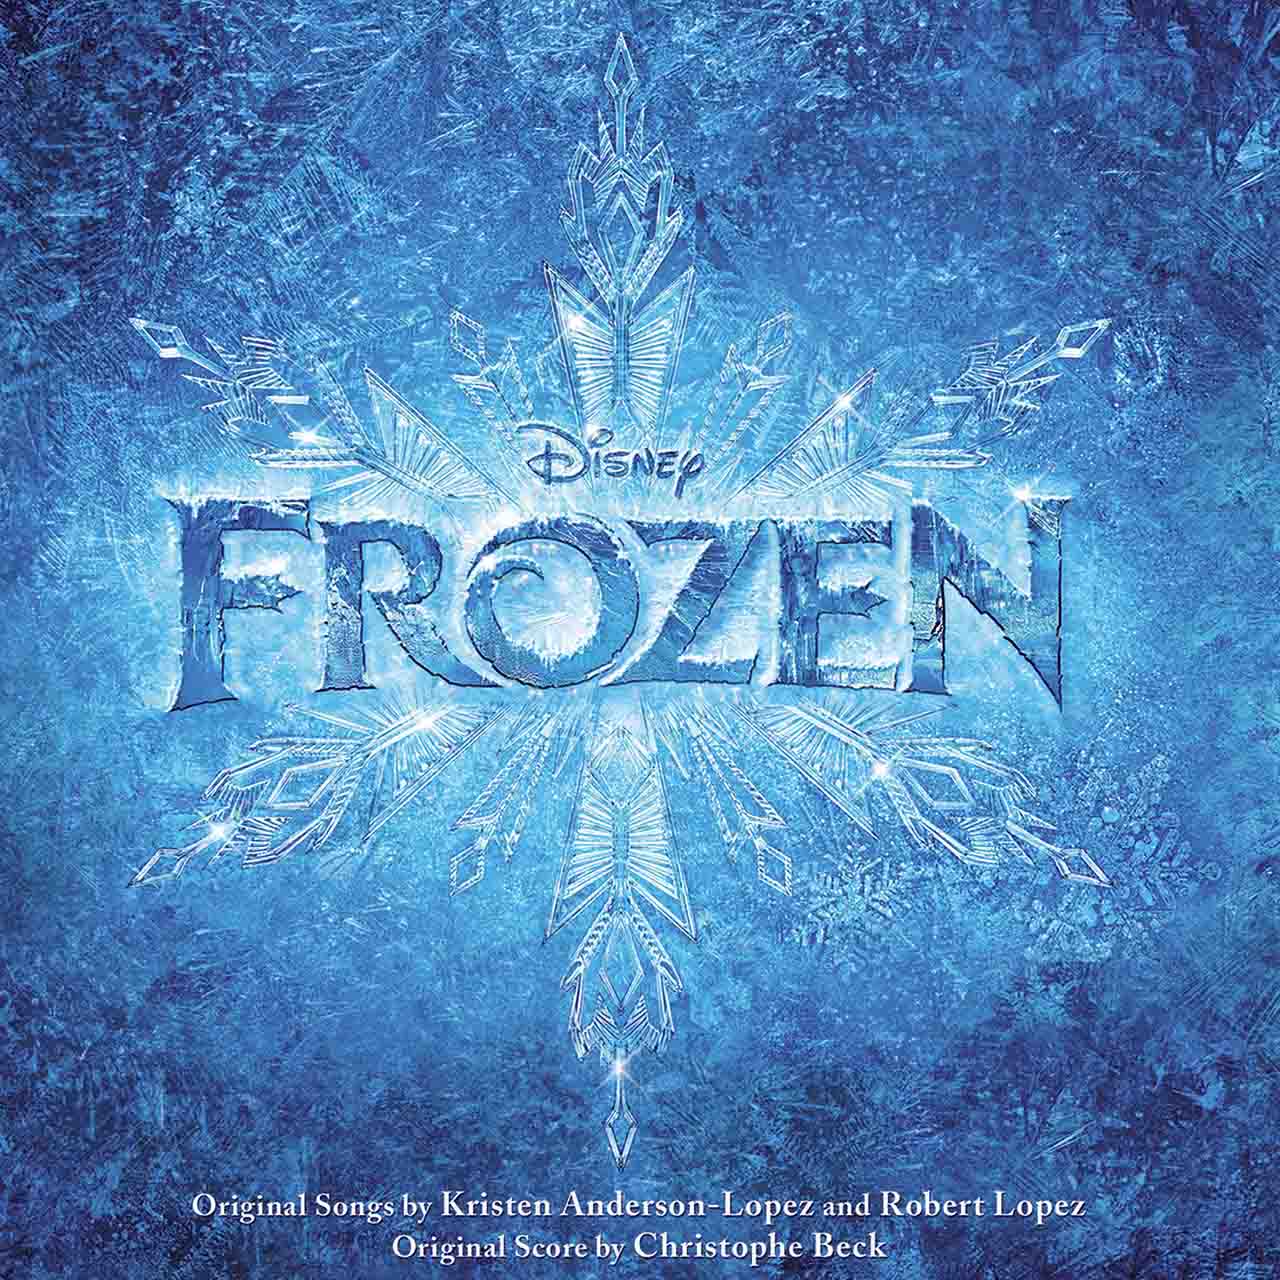 ‘Frozen’: The Classic Disney Soundtrack